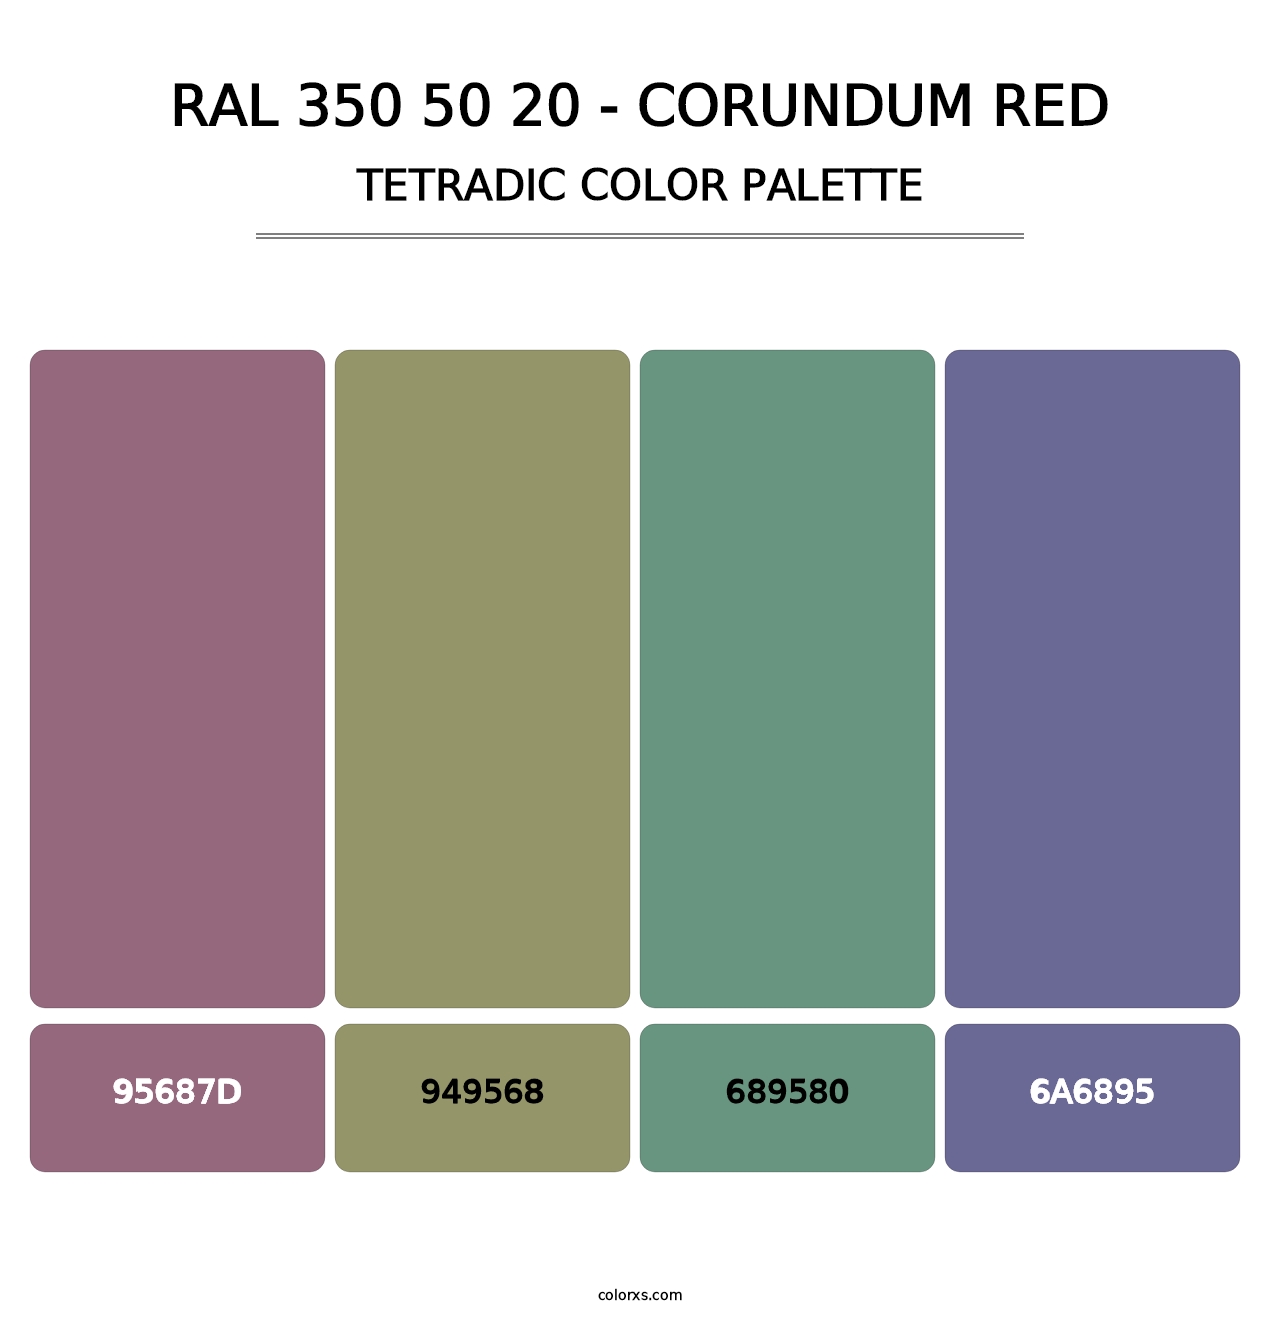 RAL 350 50 20 - Corundum Red - Tetradic Color Palette